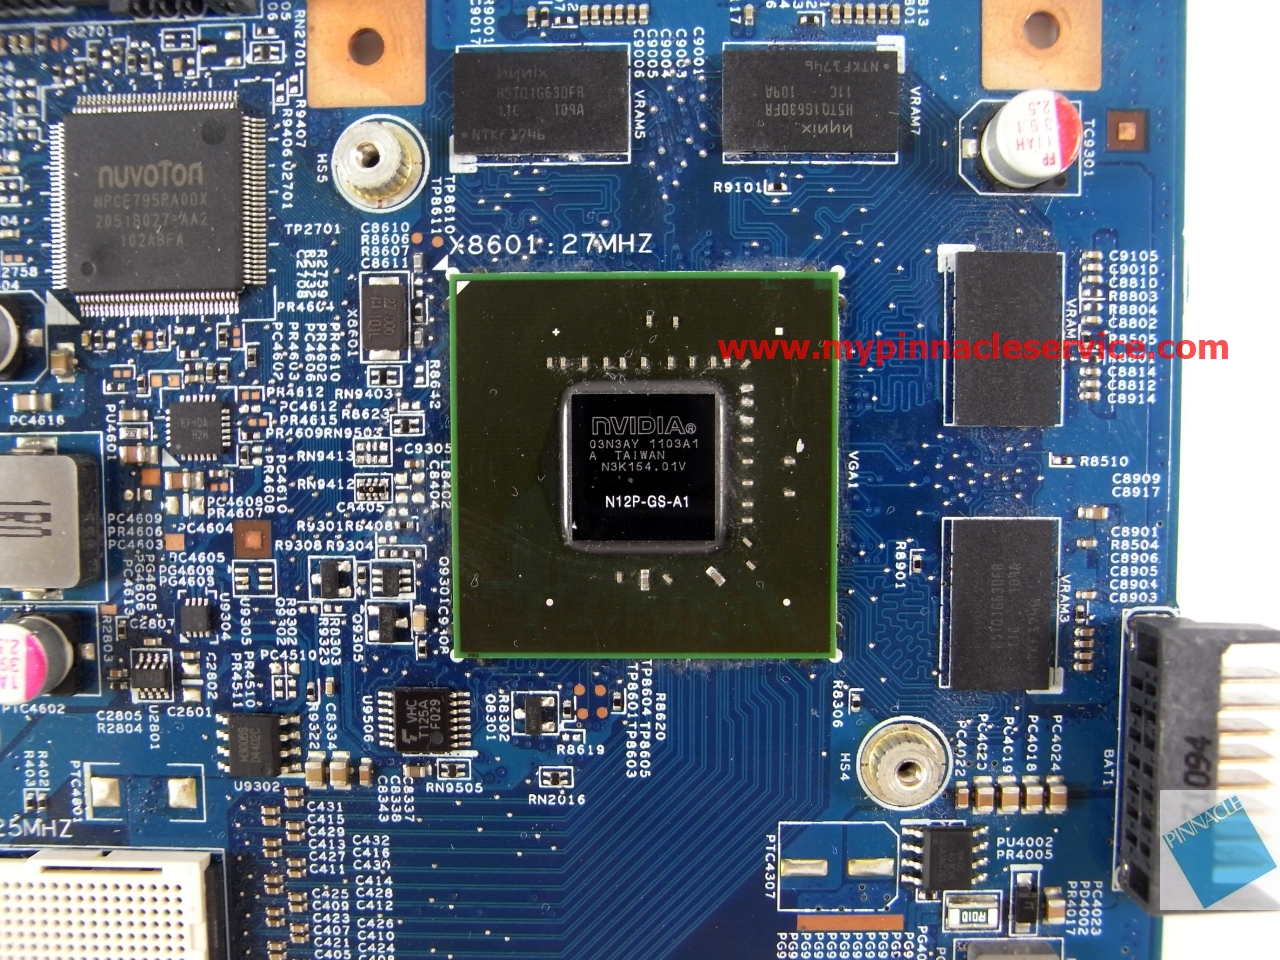 mbrc901002-motherboard-for-acer-aspire-4750-4750g-48.4iq01.031-r0010312.jpg